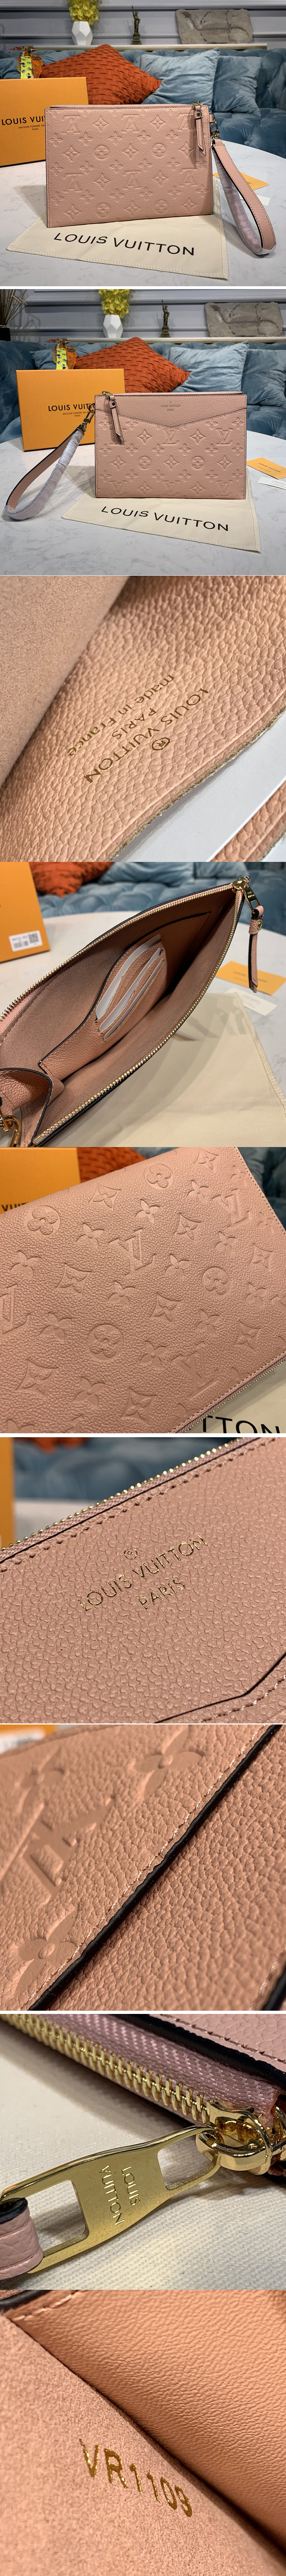 Louis Vuitton M68707 LV Pochette Melanie MM Bag in Pink Monogram Empreinte  leather Replica sale online ,buy fake bag